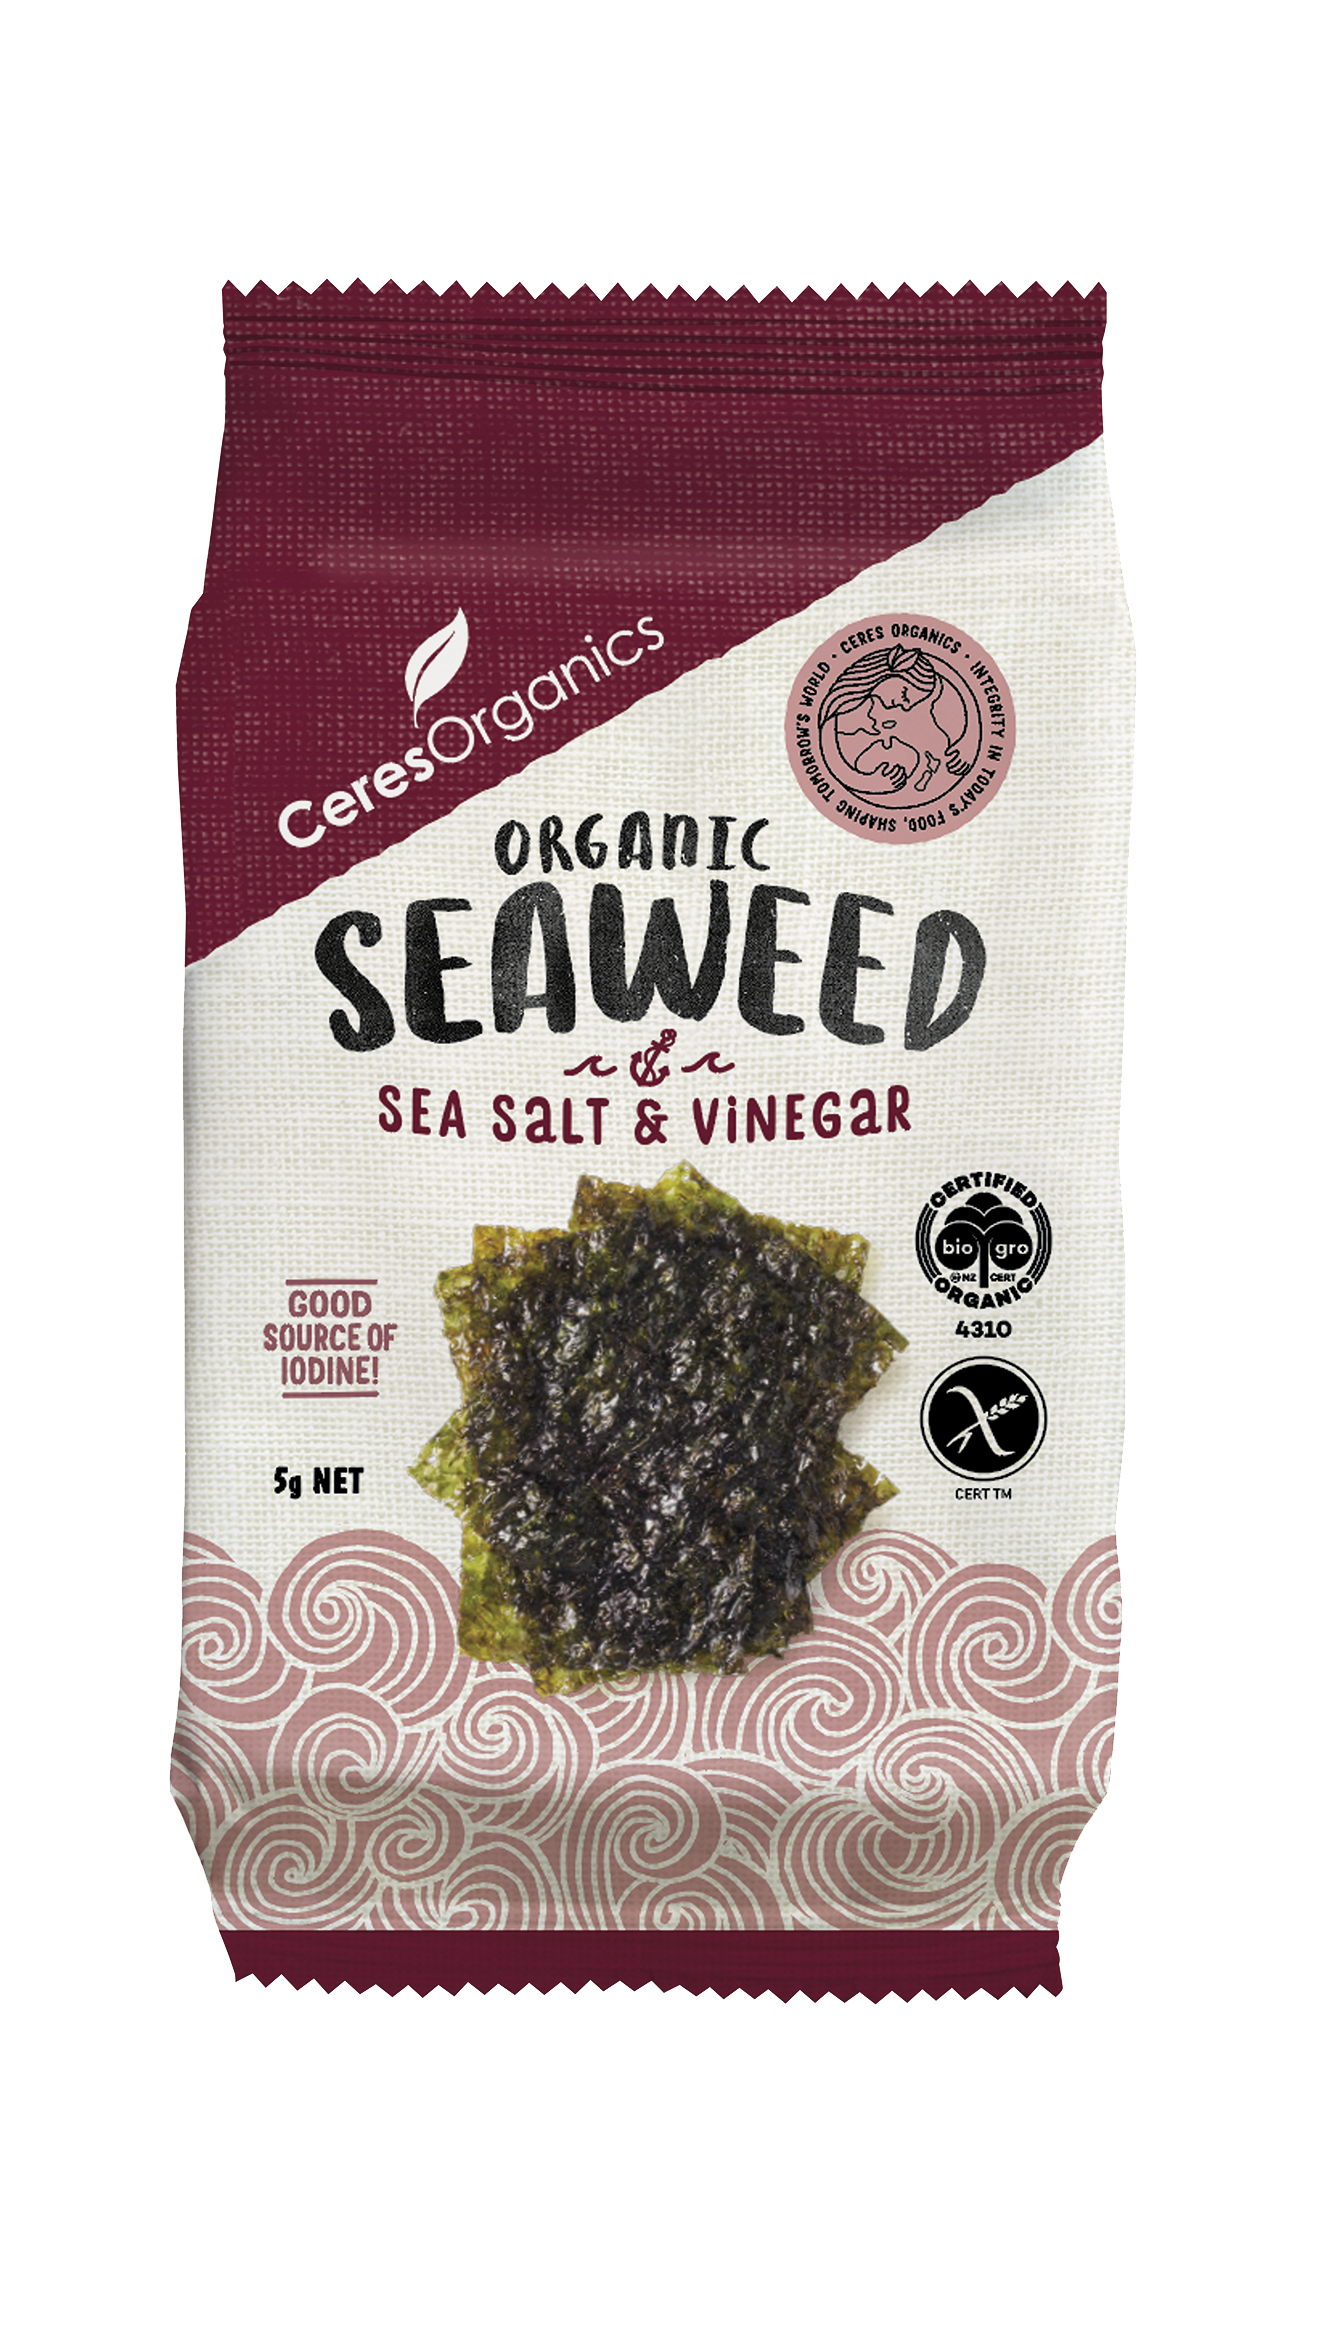 Organic Roasted Seaweed, Salt & Vinegar Nori Snack - 5g